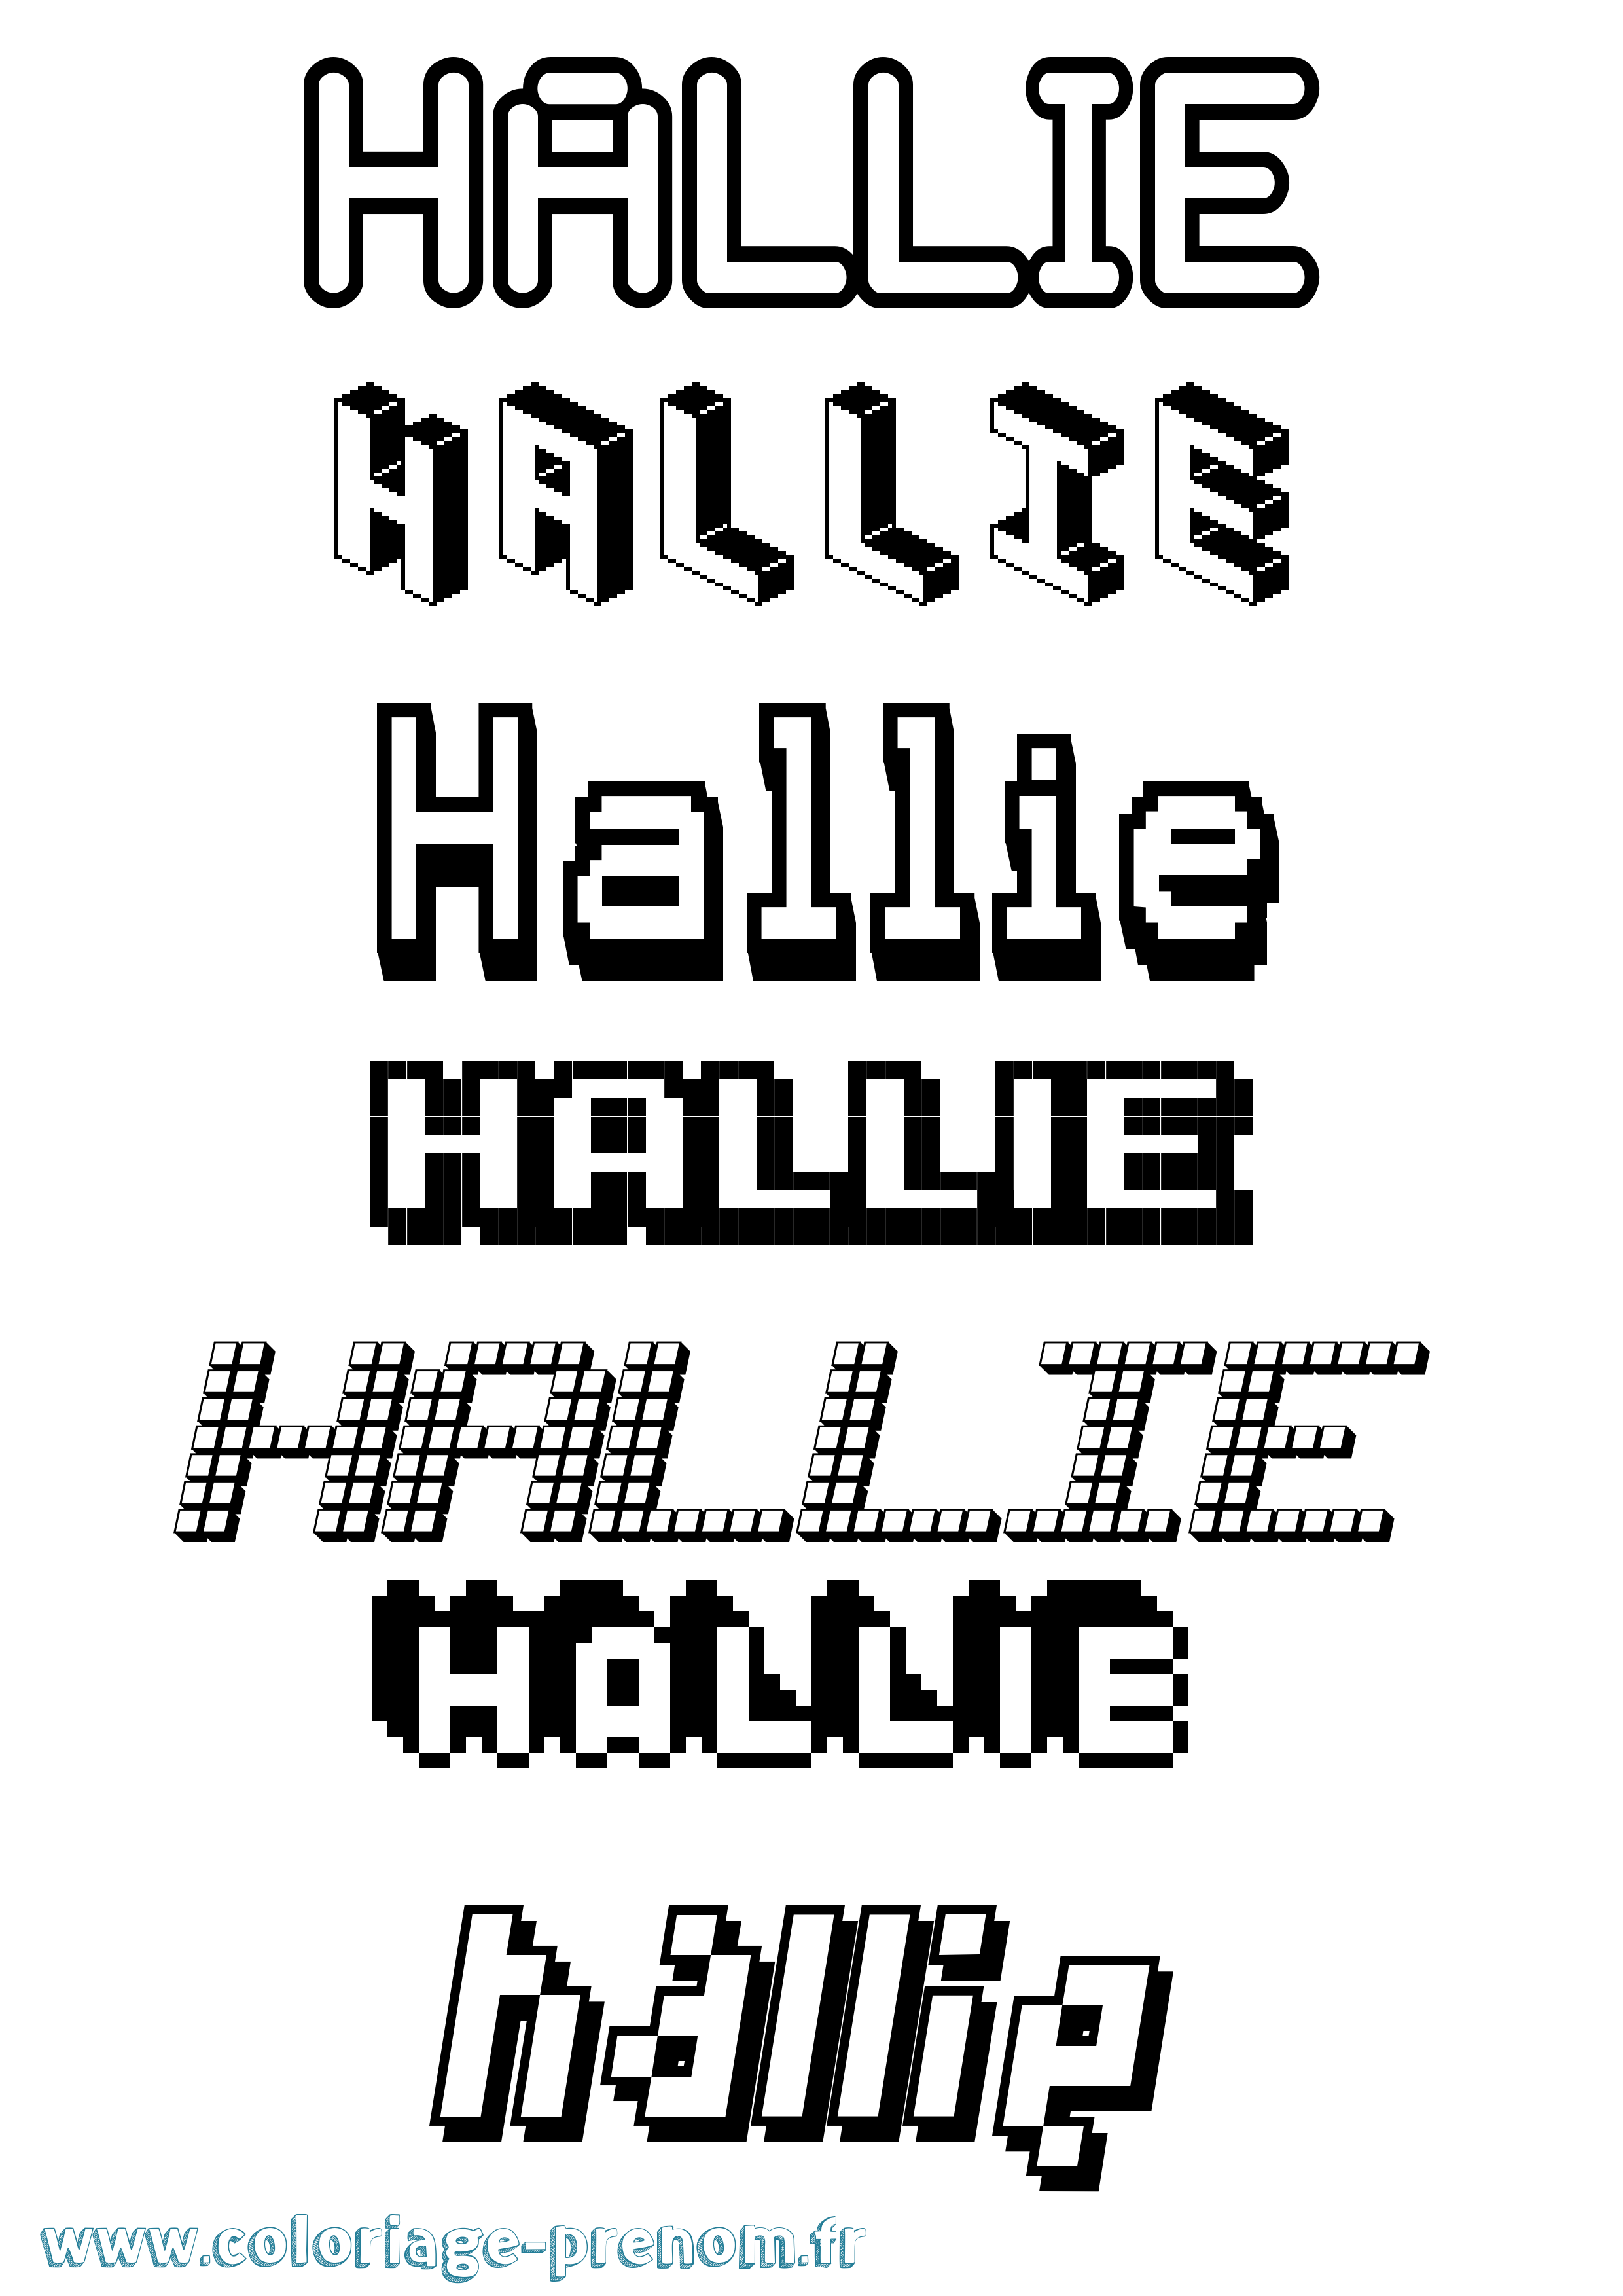 Coloriage prénom Hallie Pixel